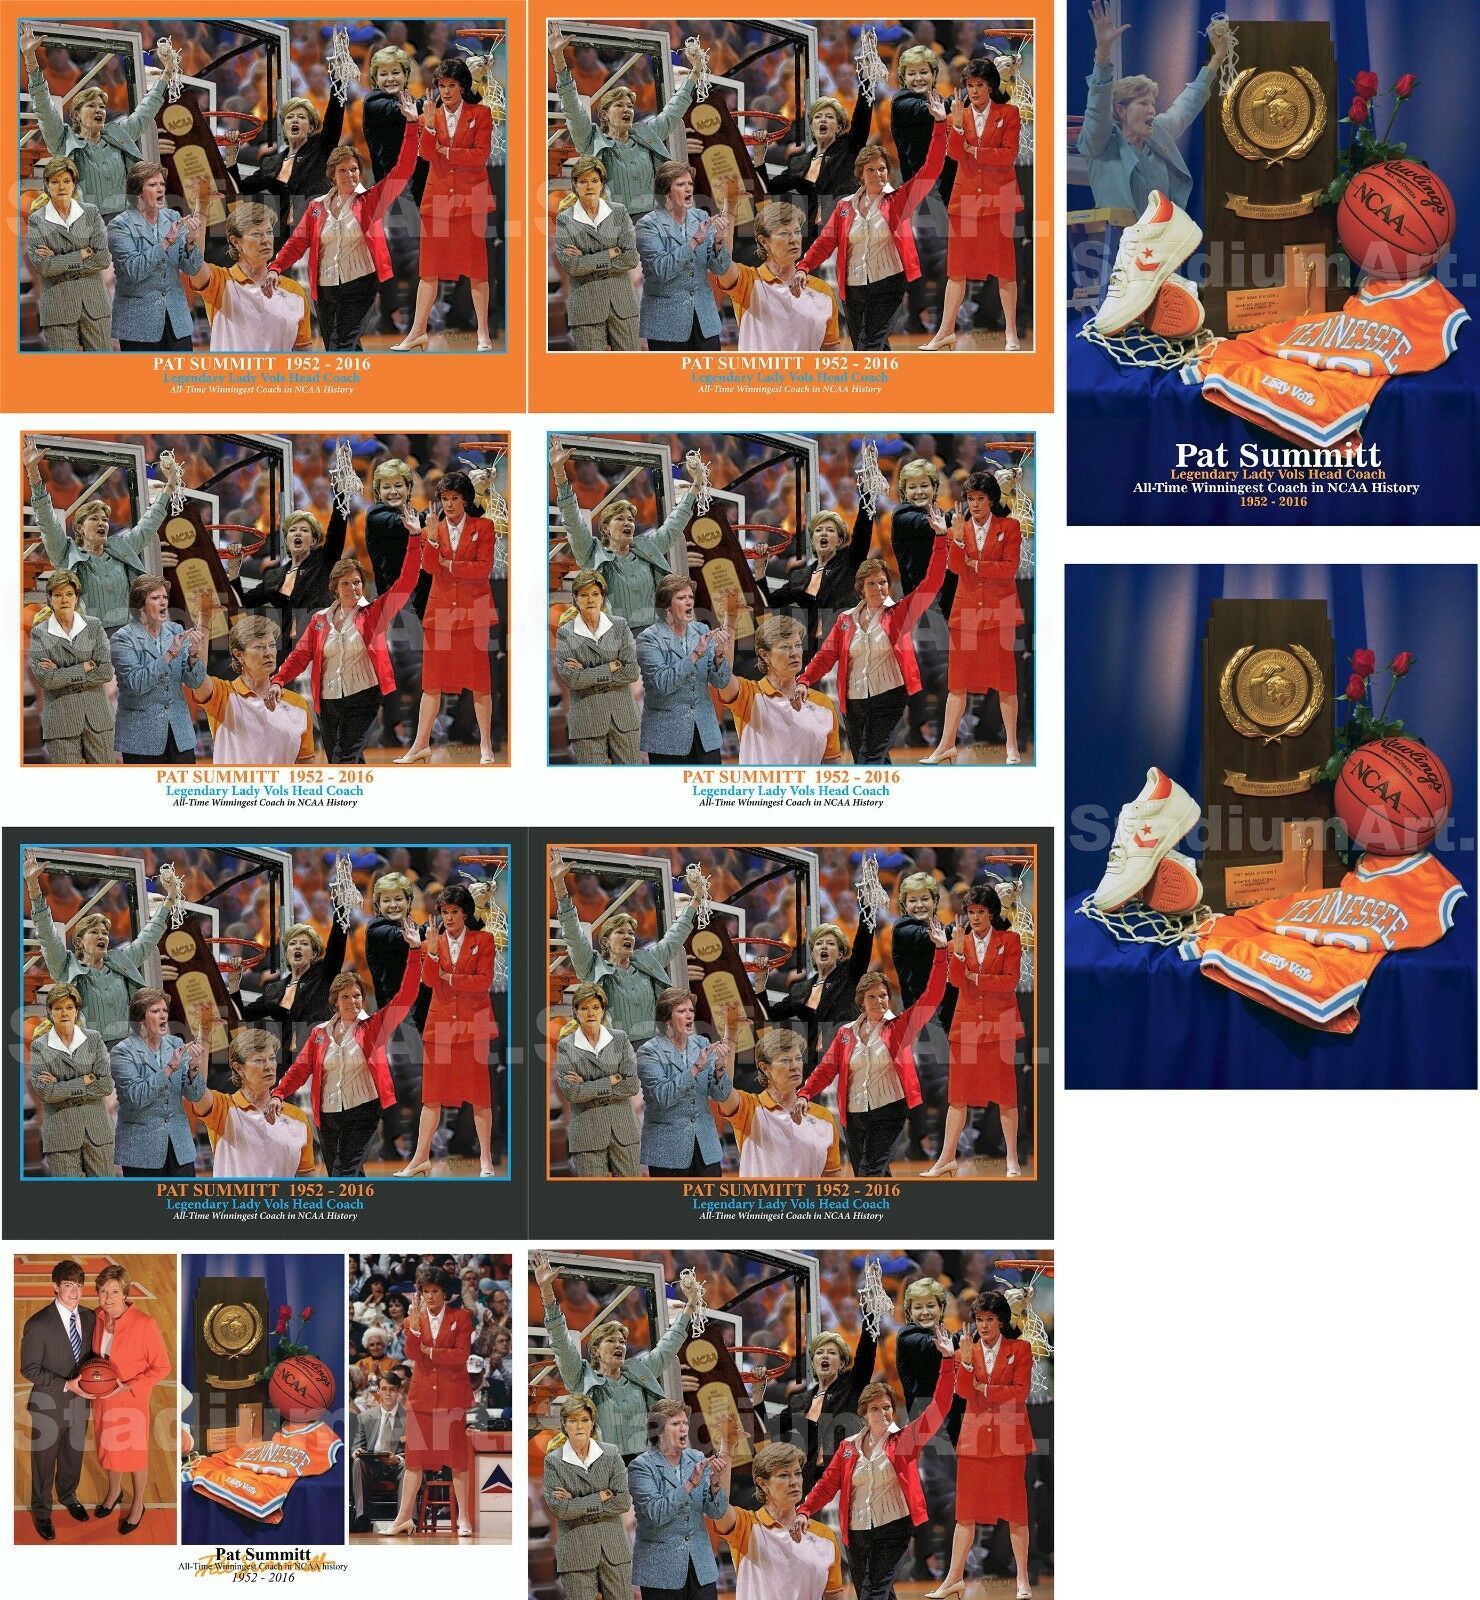 Pat Summitt UT Lady Vols Tennessee Volunteers Womens Basketball Art Photo CHOICE - $24.99 - $189.00